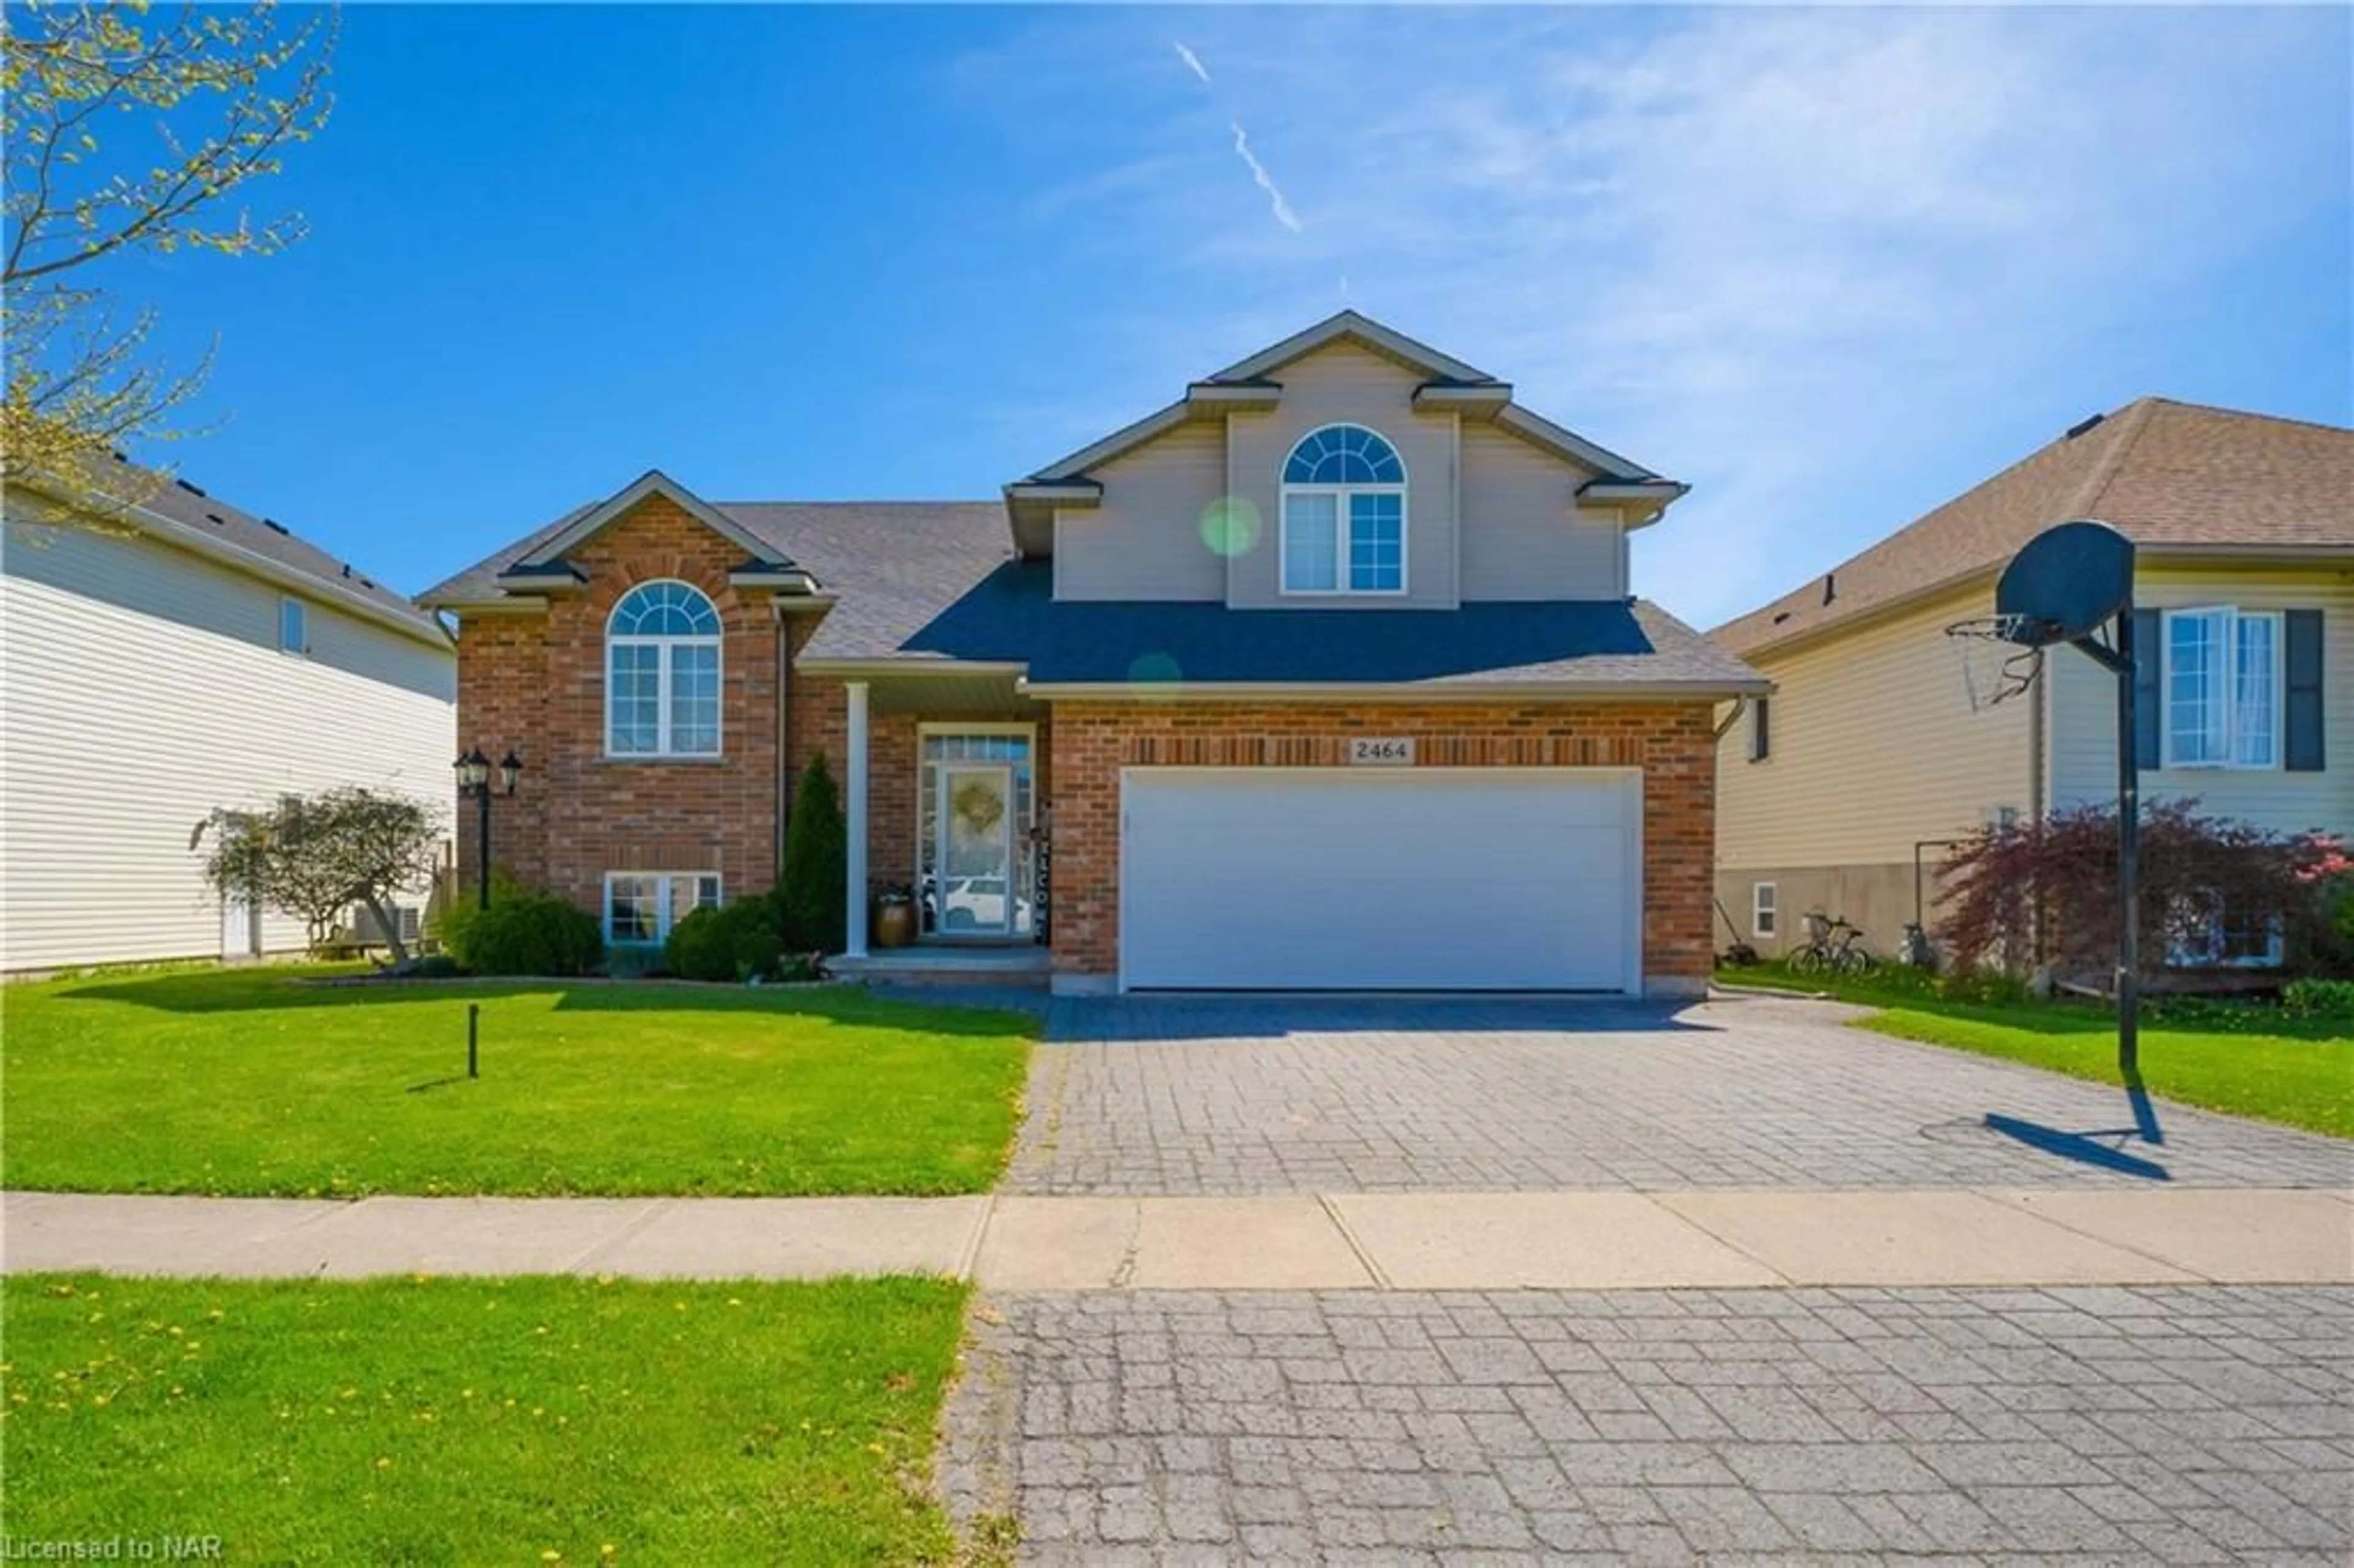 Frontside or backside of a home for 2464 Diane St, Stevensville Ontario L0S 1S0